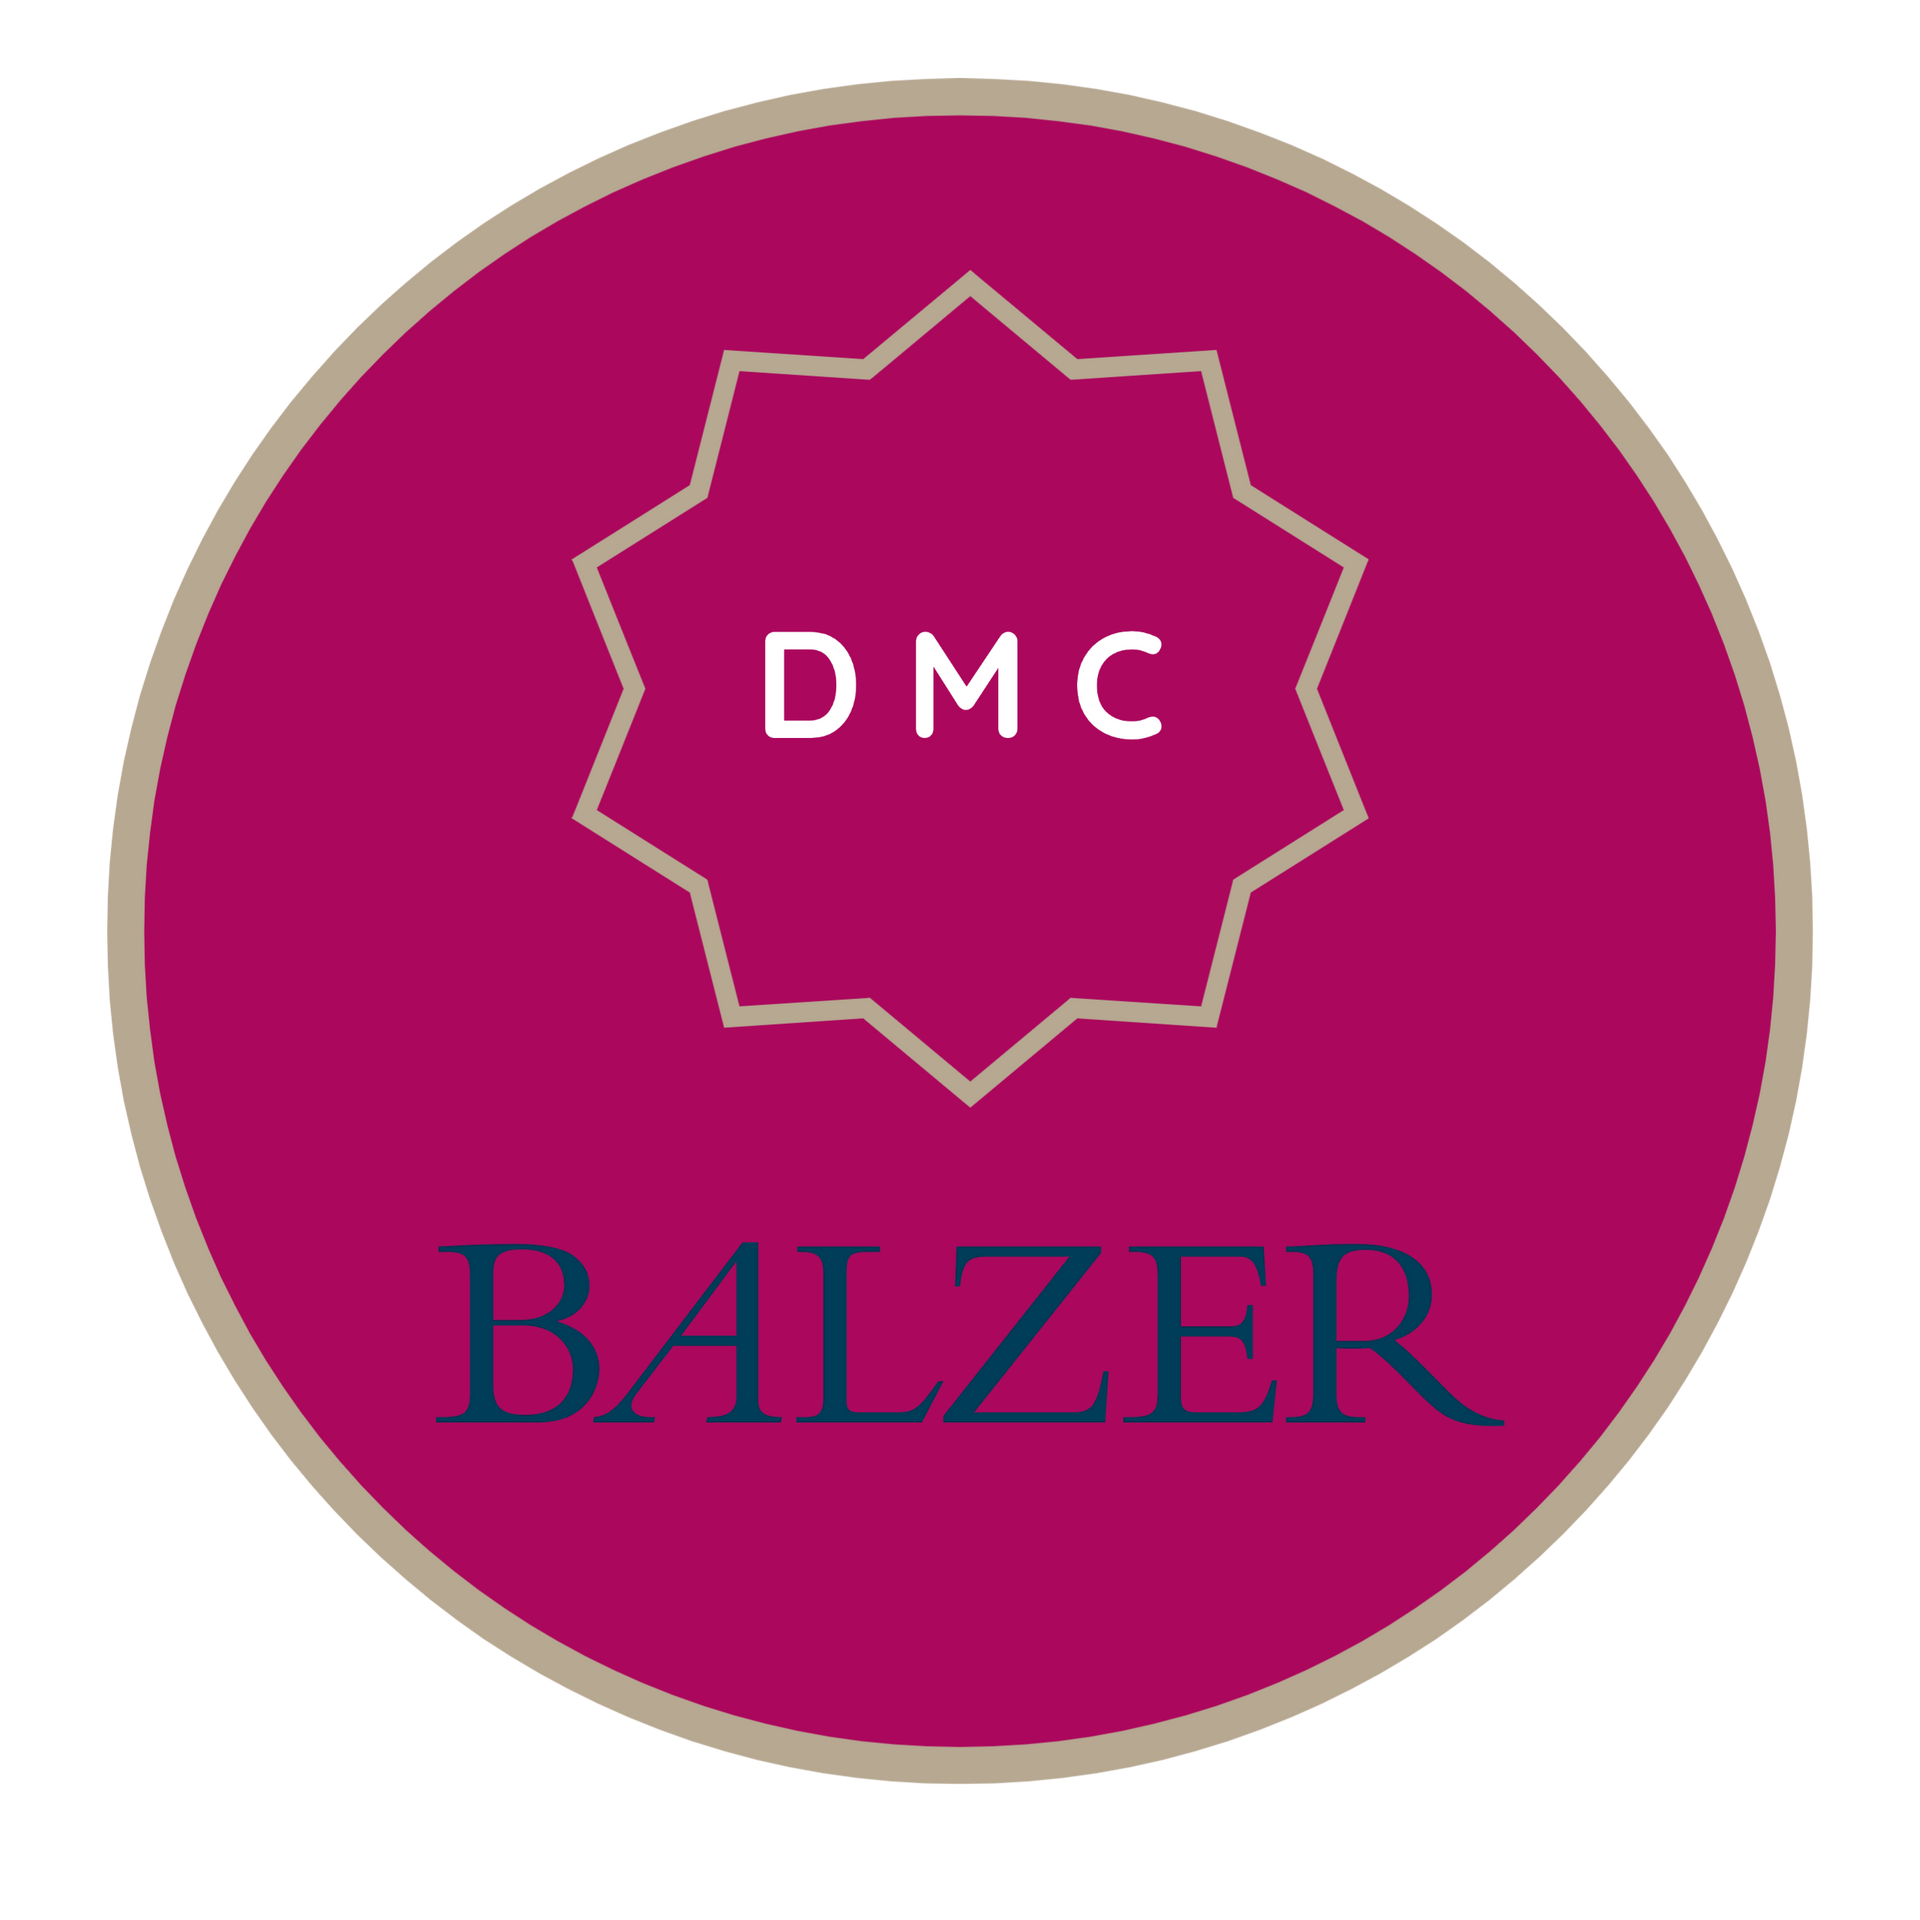 BALZER-Signet-DMC